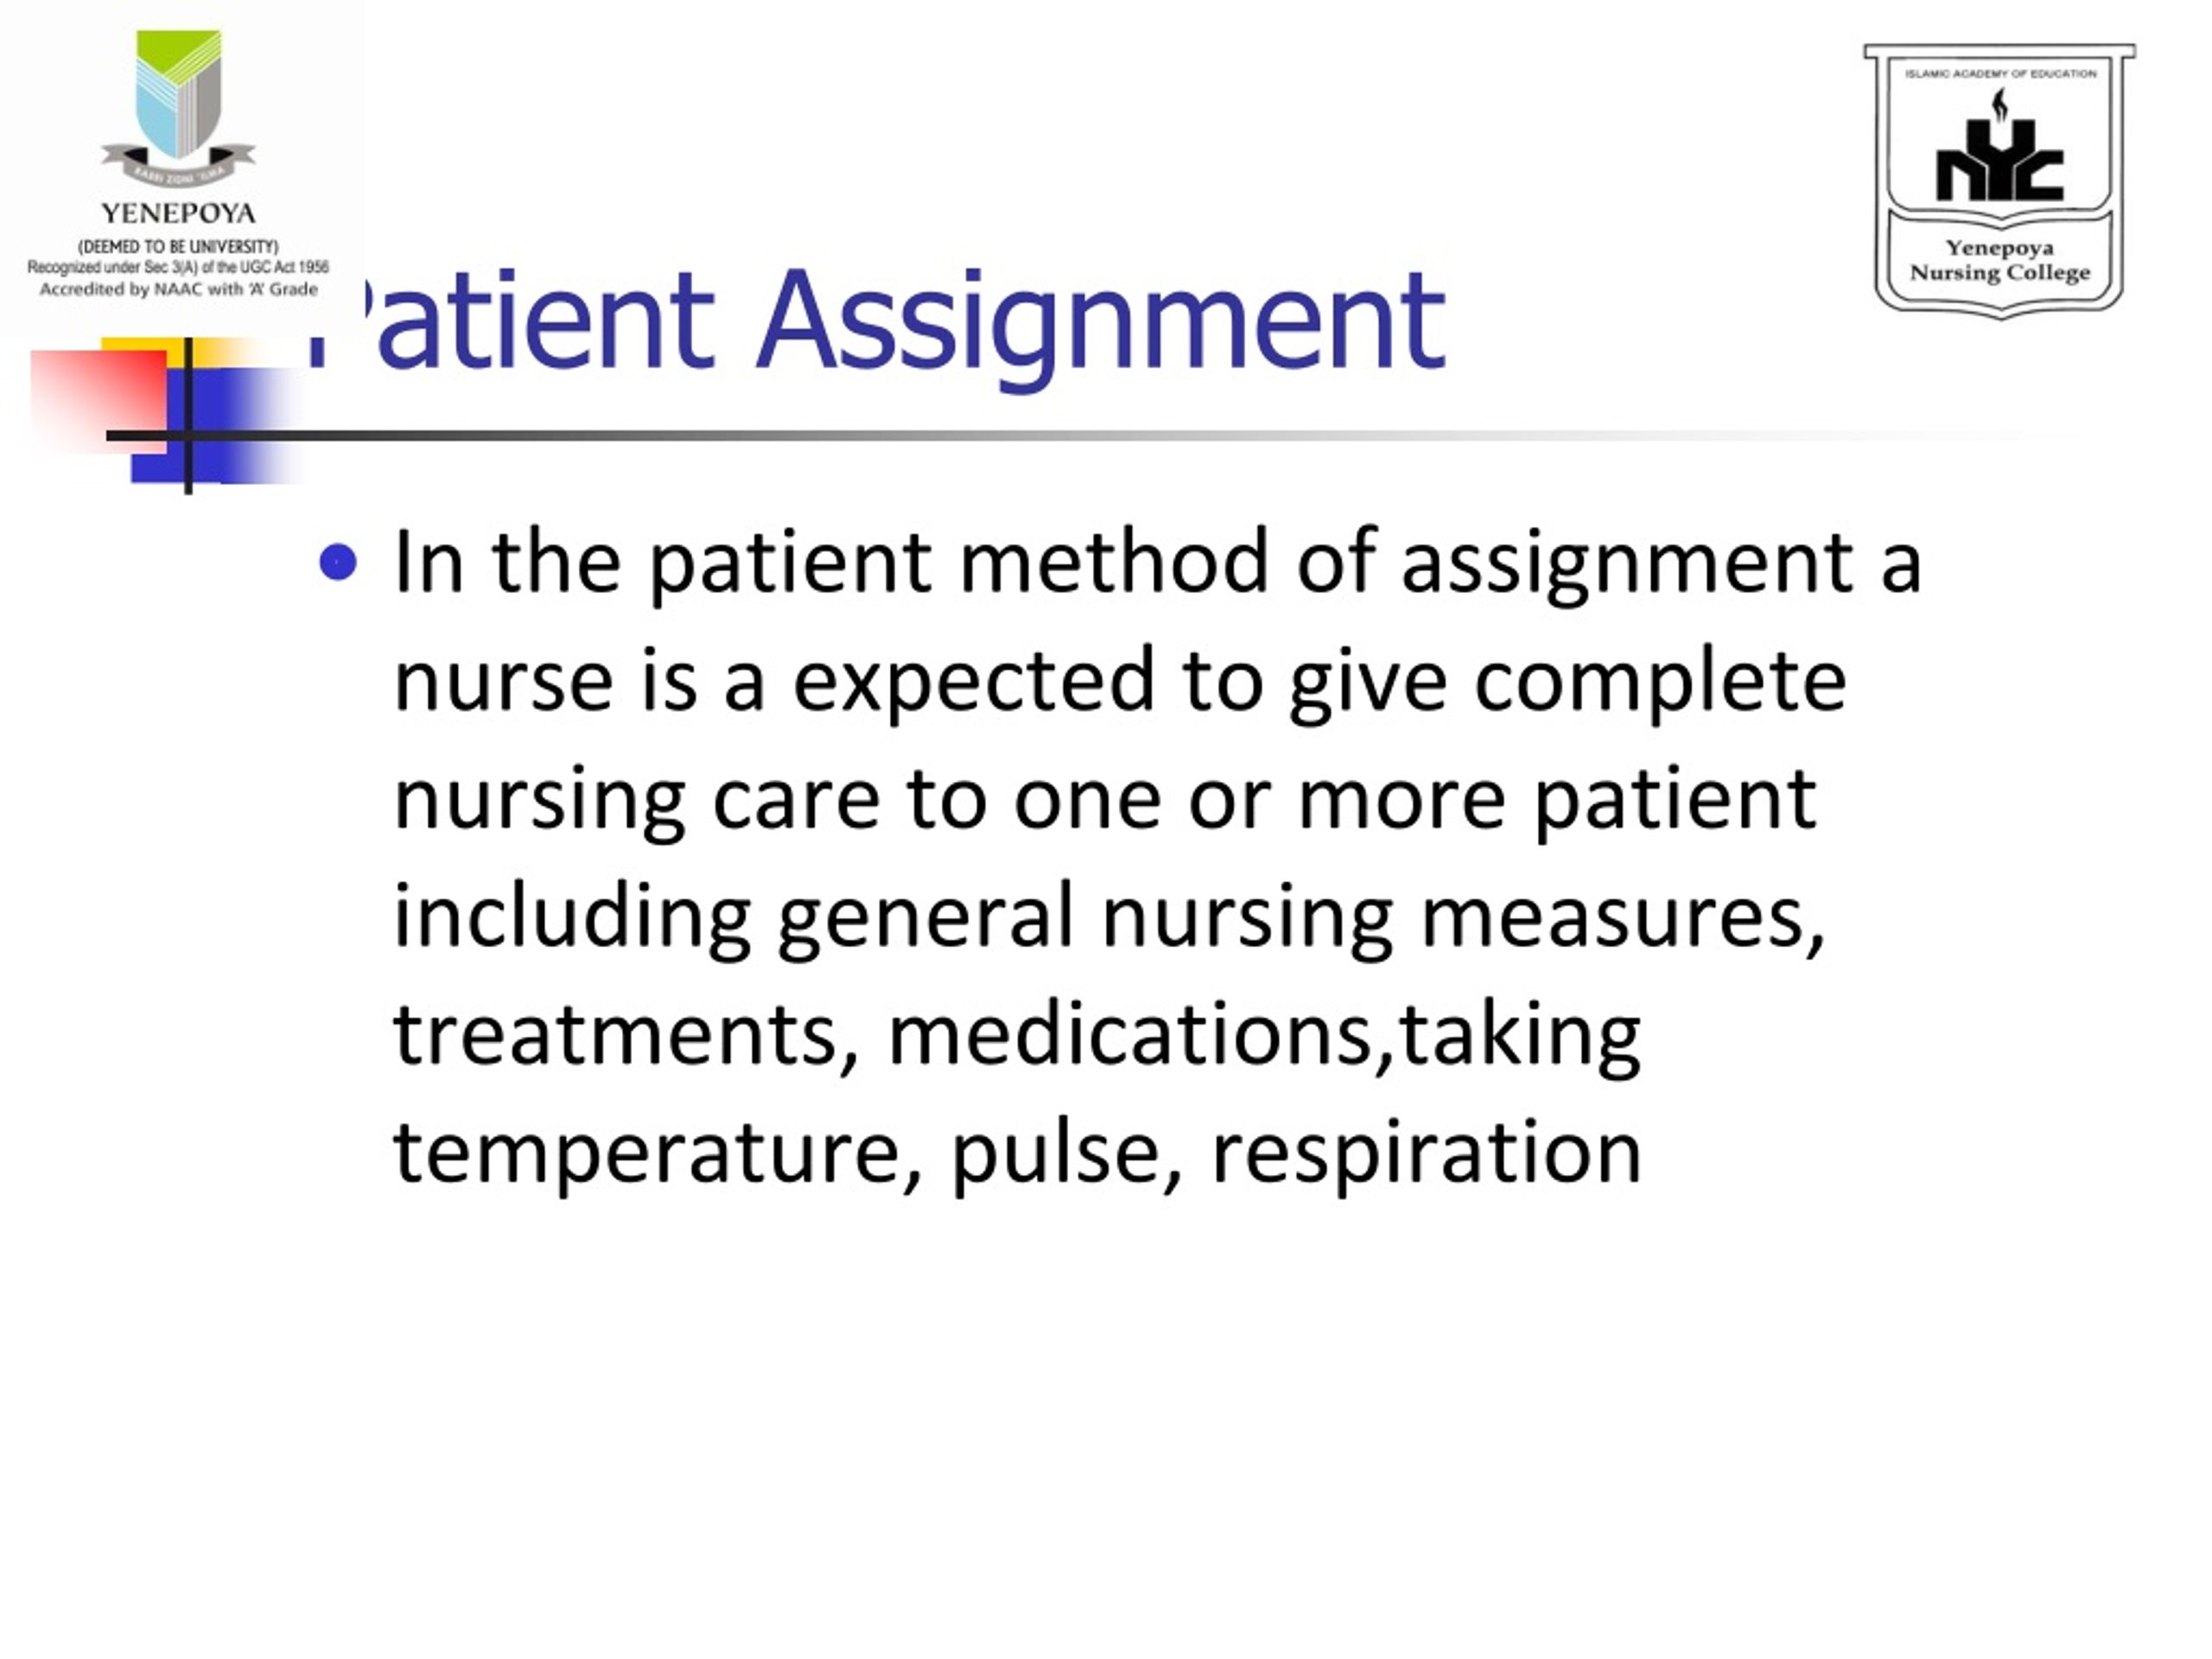 staff assignment and nursing care